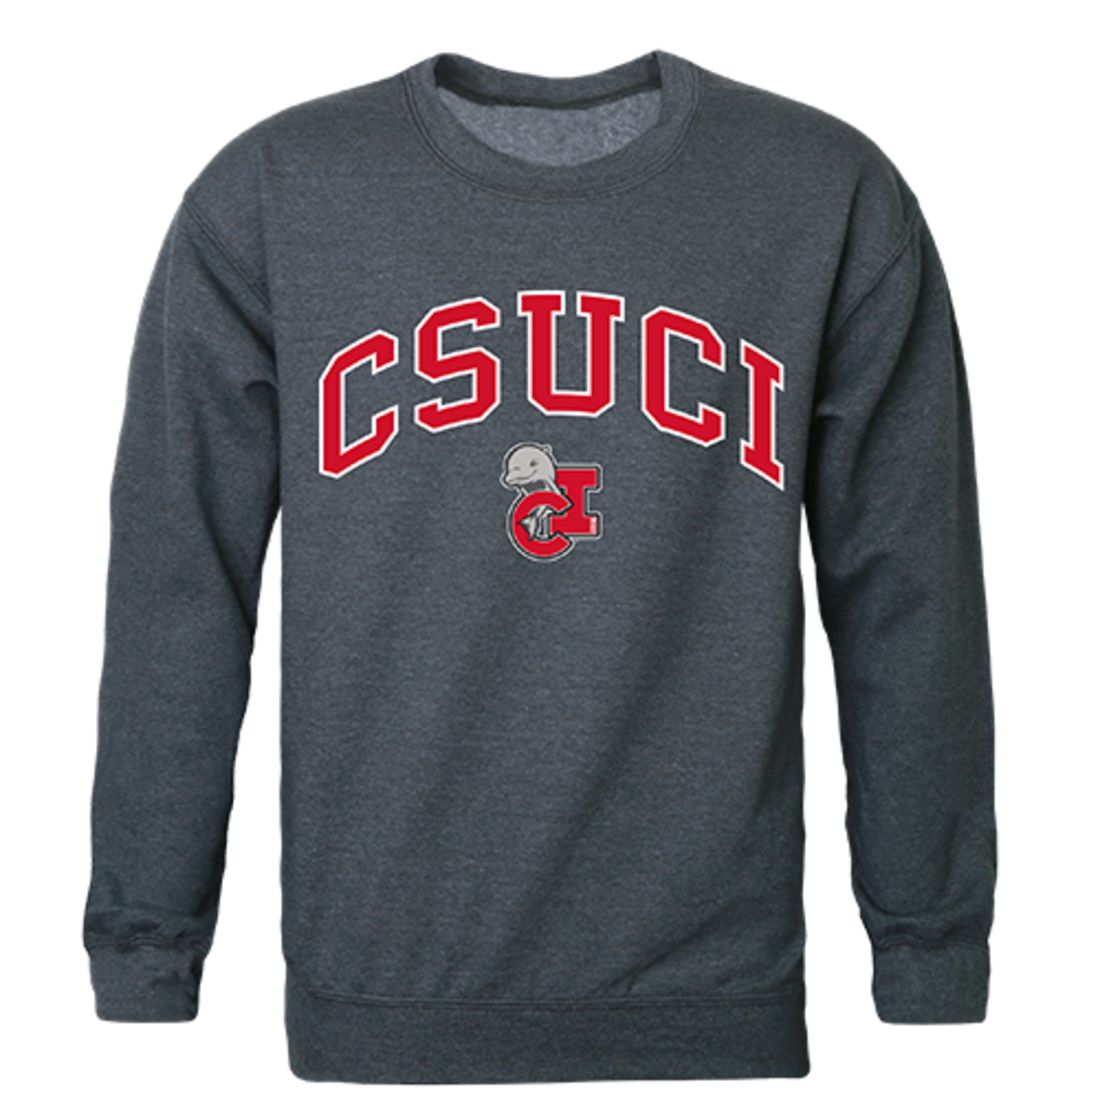 CSUCI CalIfornia State University Channel Islands Campus Crewneck Pullover Sweatshirt Sweater Heather Charcoal-Campus-Wardrobe